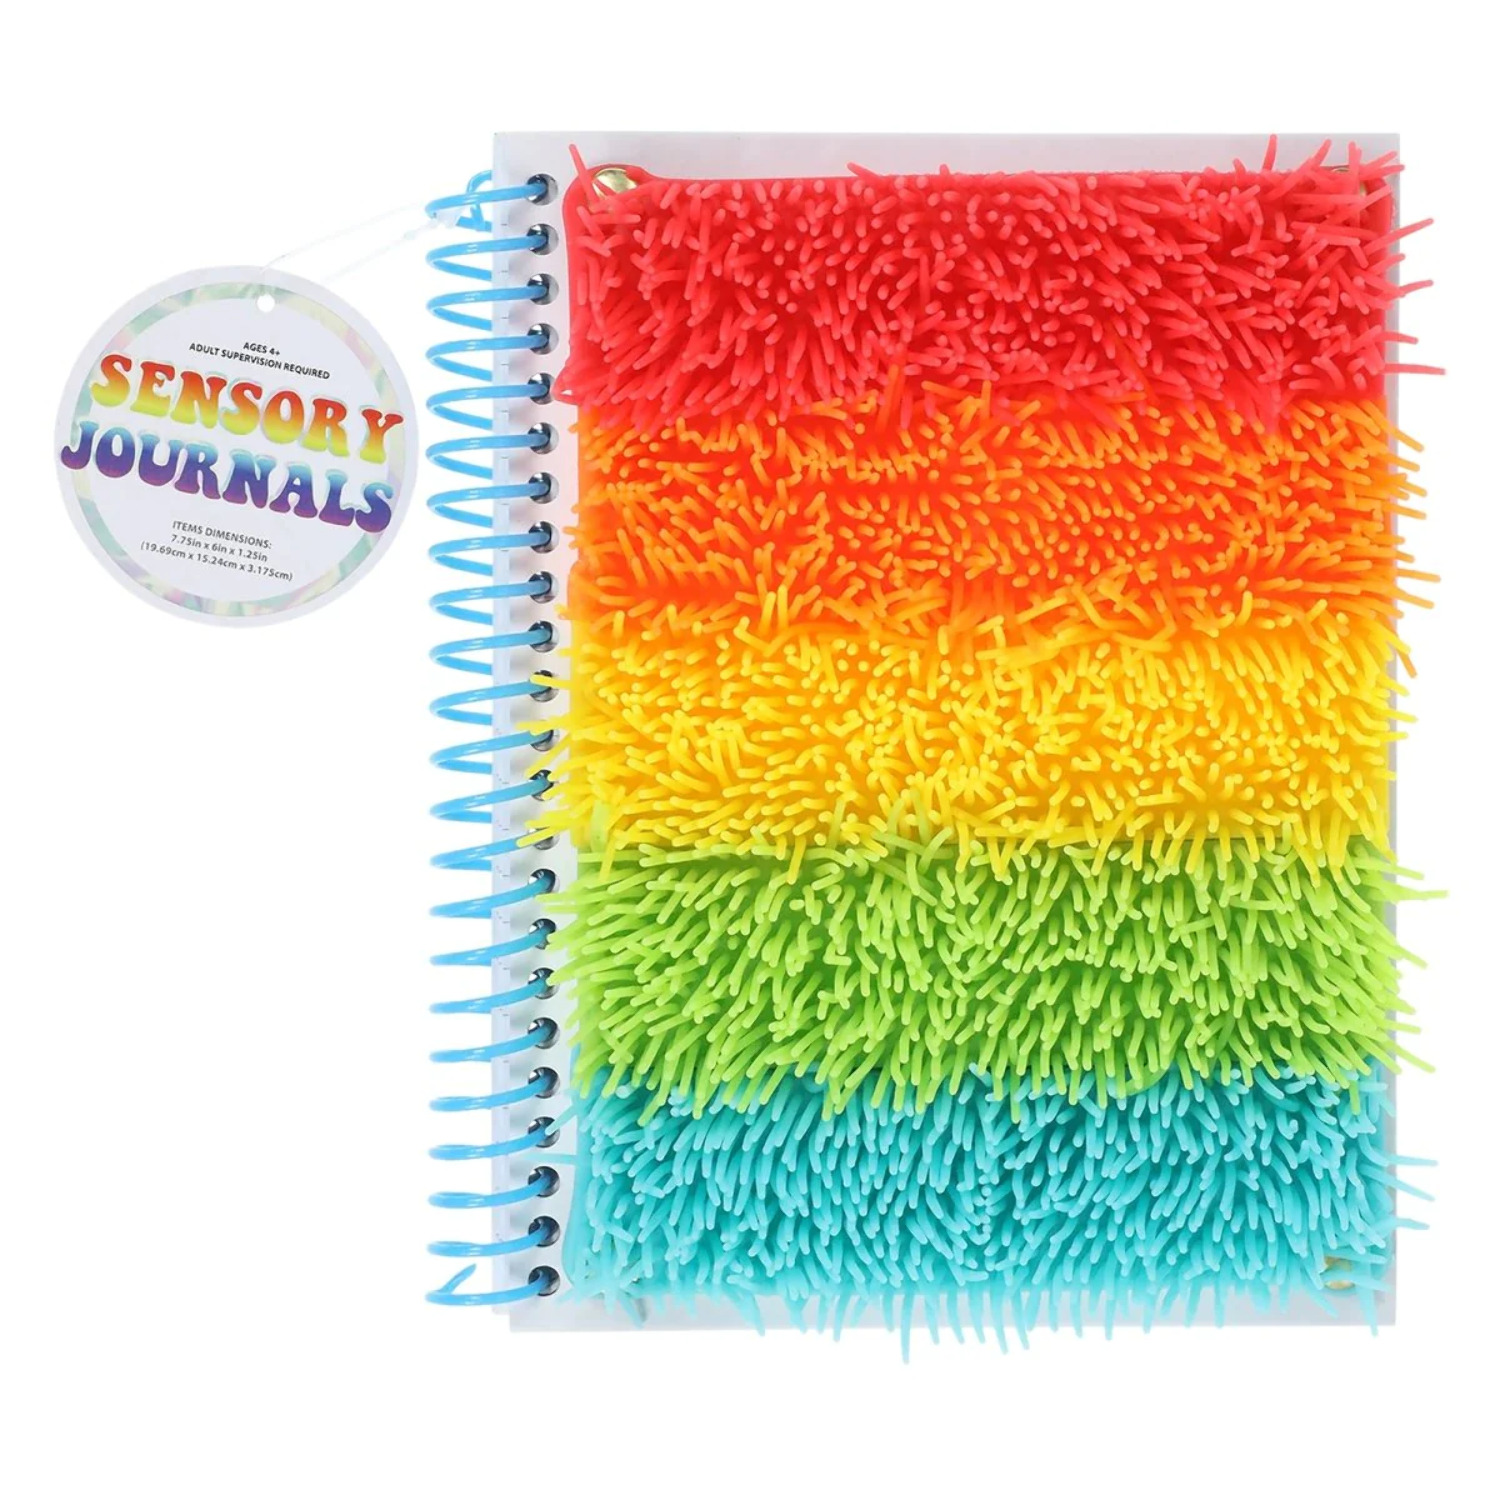 Zegsy rainbow sensory journal - image 5 of 5